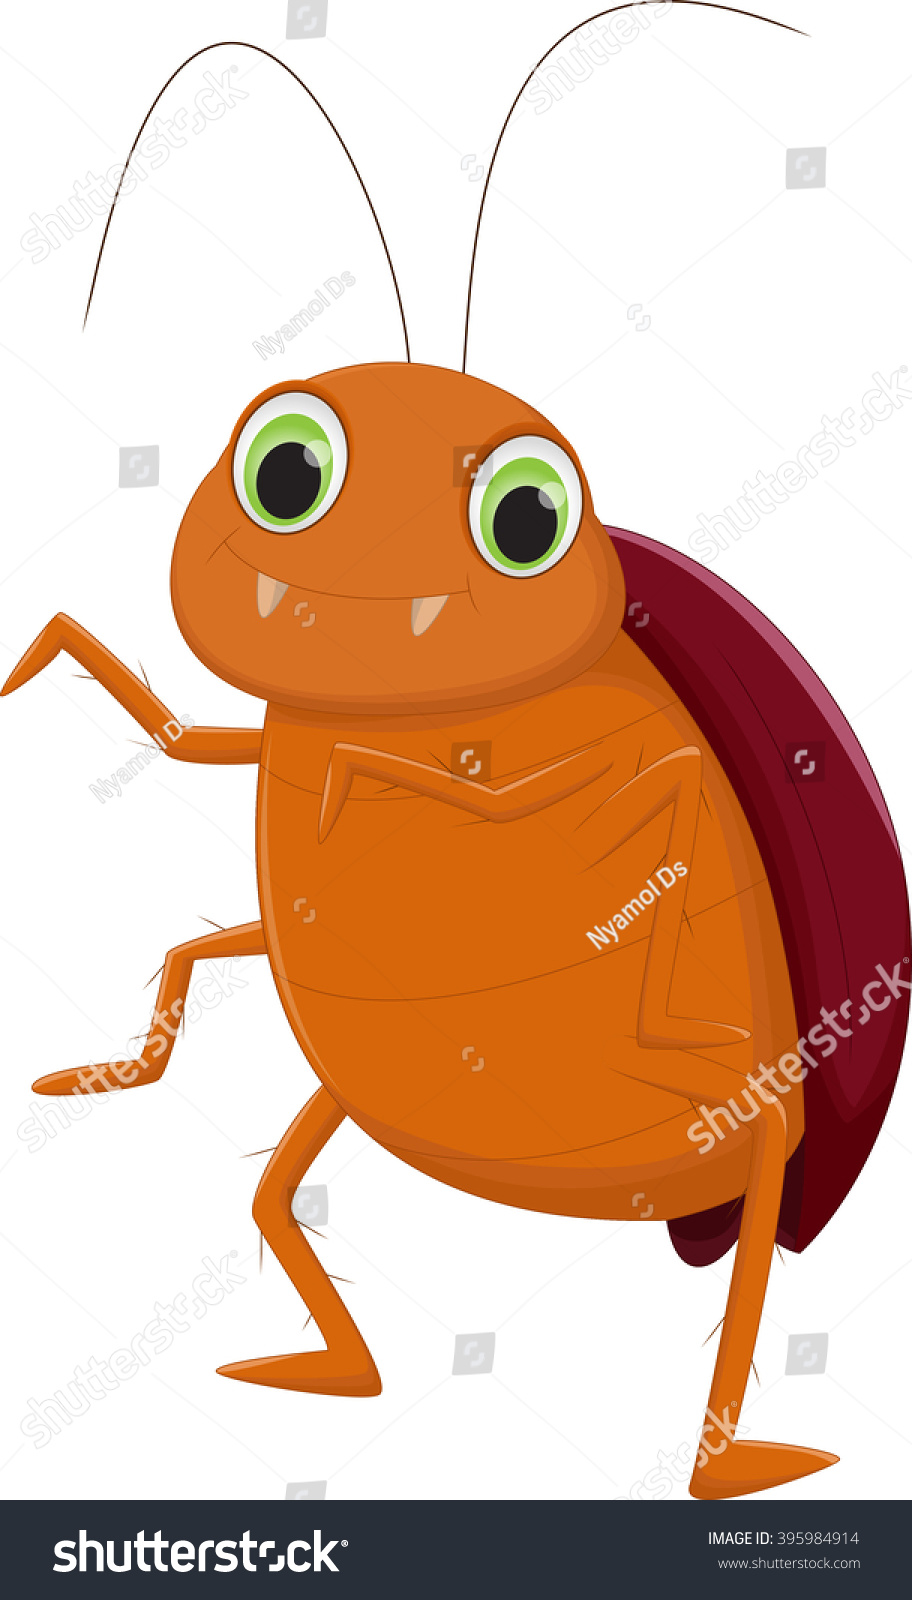 Cute Cockroach Cartoon Stock Illustration 395984914 - Shutterstock